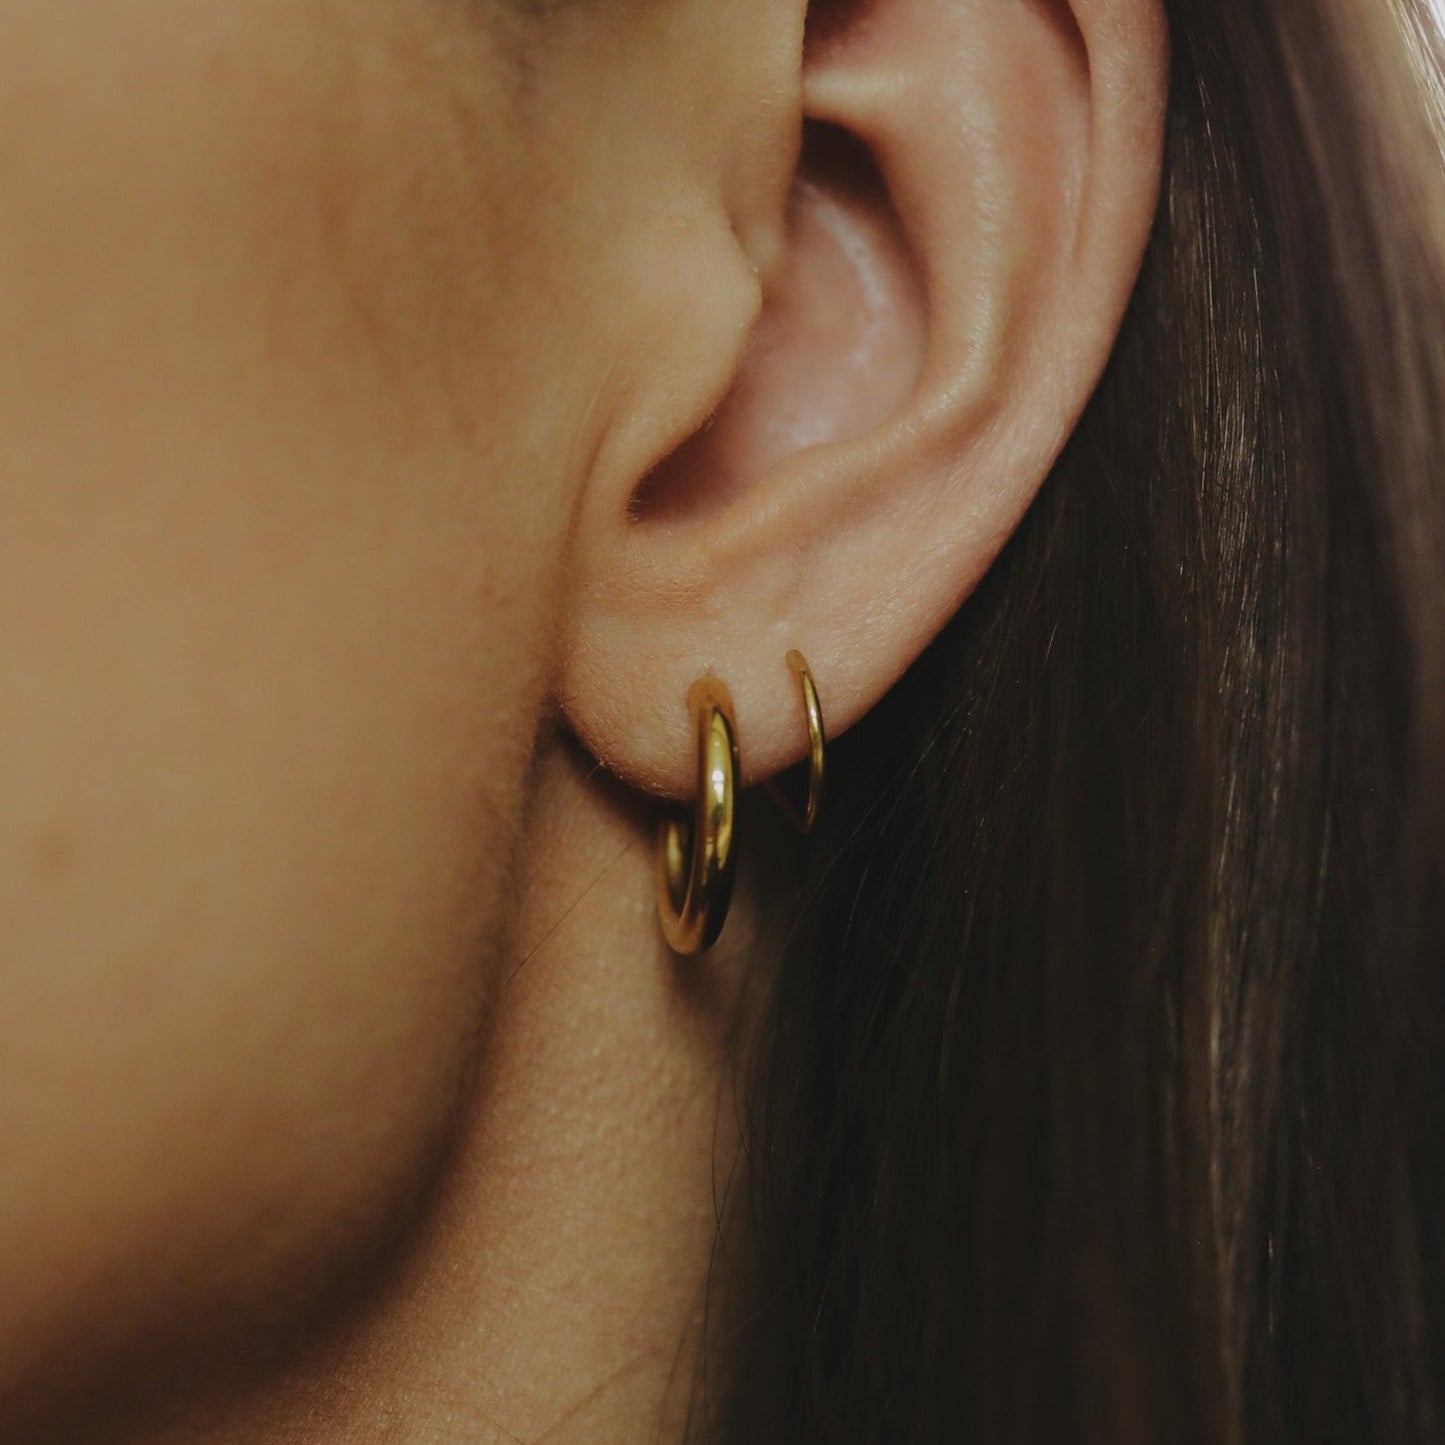 Gold Spiral Hoop Earrings - Camillaboutiqueco camillaboutiqueshop.com